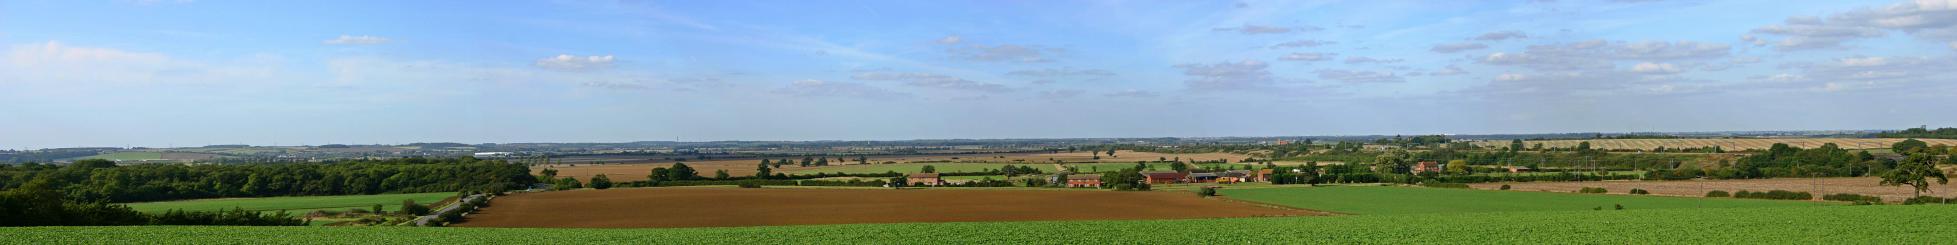 20050924-152554.jpg - Fenland panorama from Walton Hill (near Wood Walton)